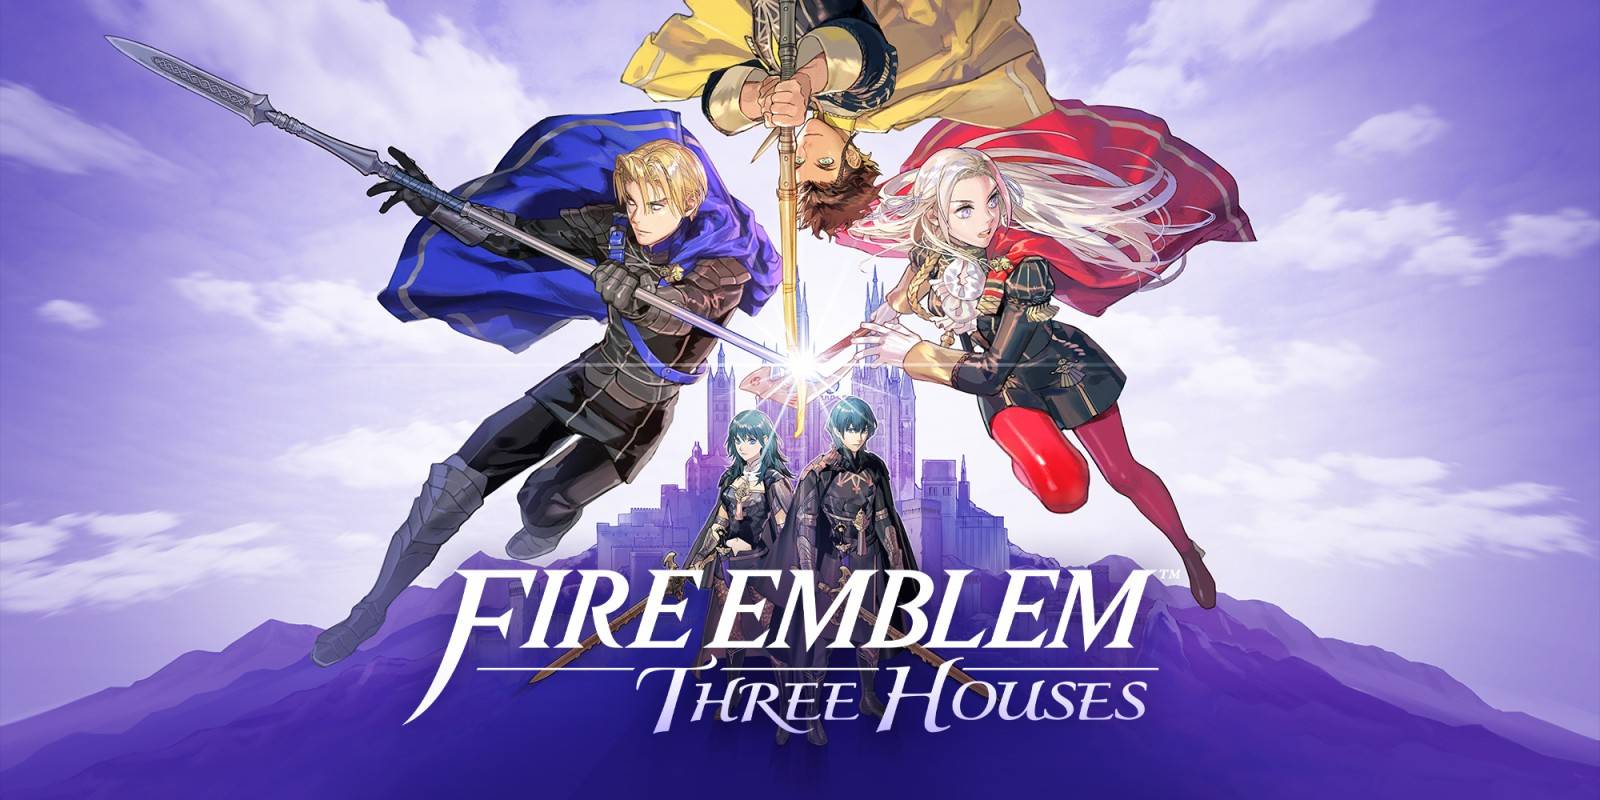 Tenemos más detalles sobre Fire Emblem: Three Houses